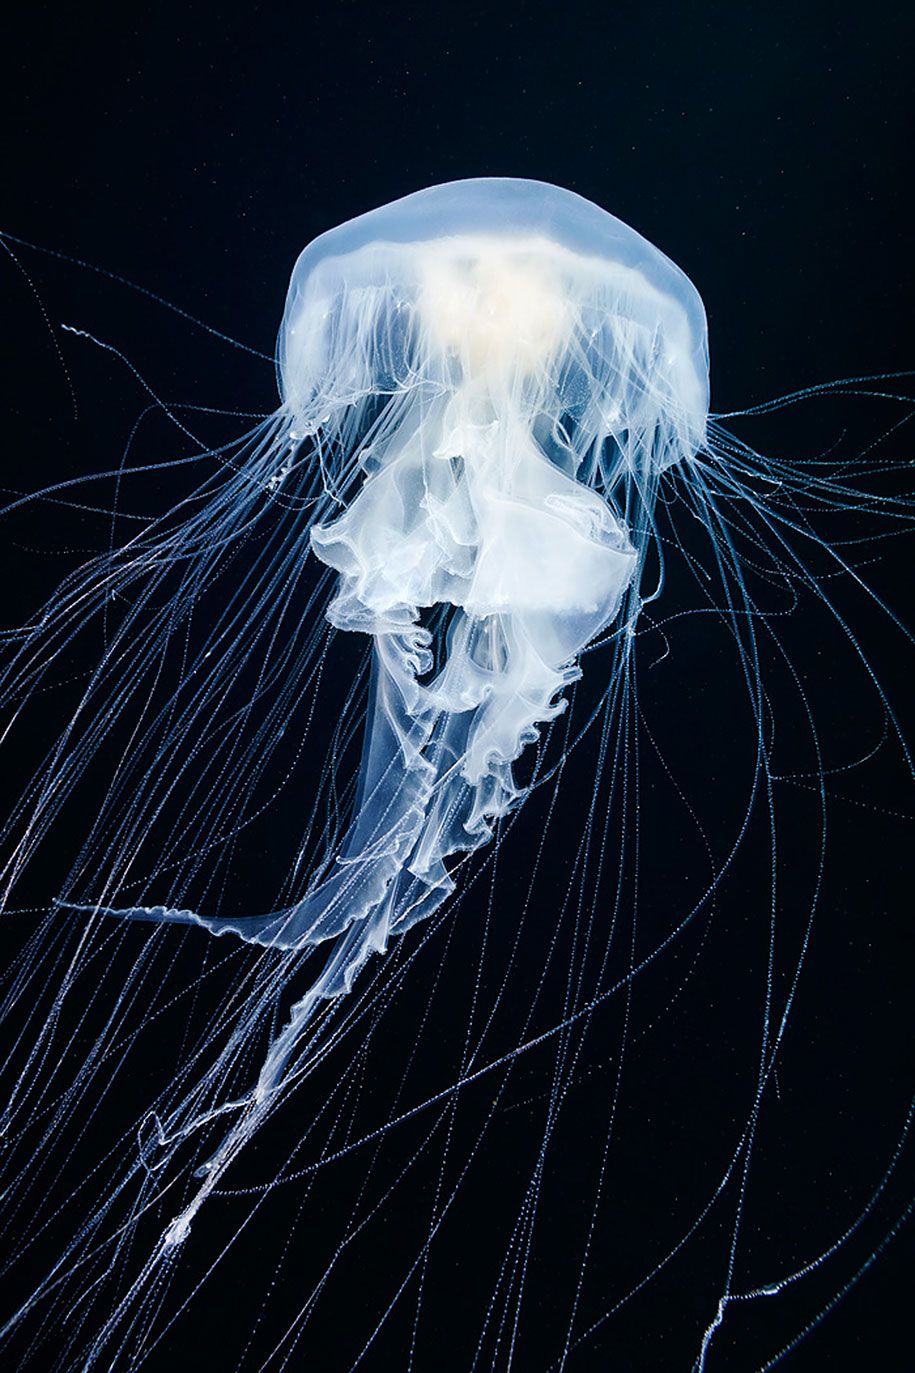 fotografia-medusa-submarina-alexander-semenov-2